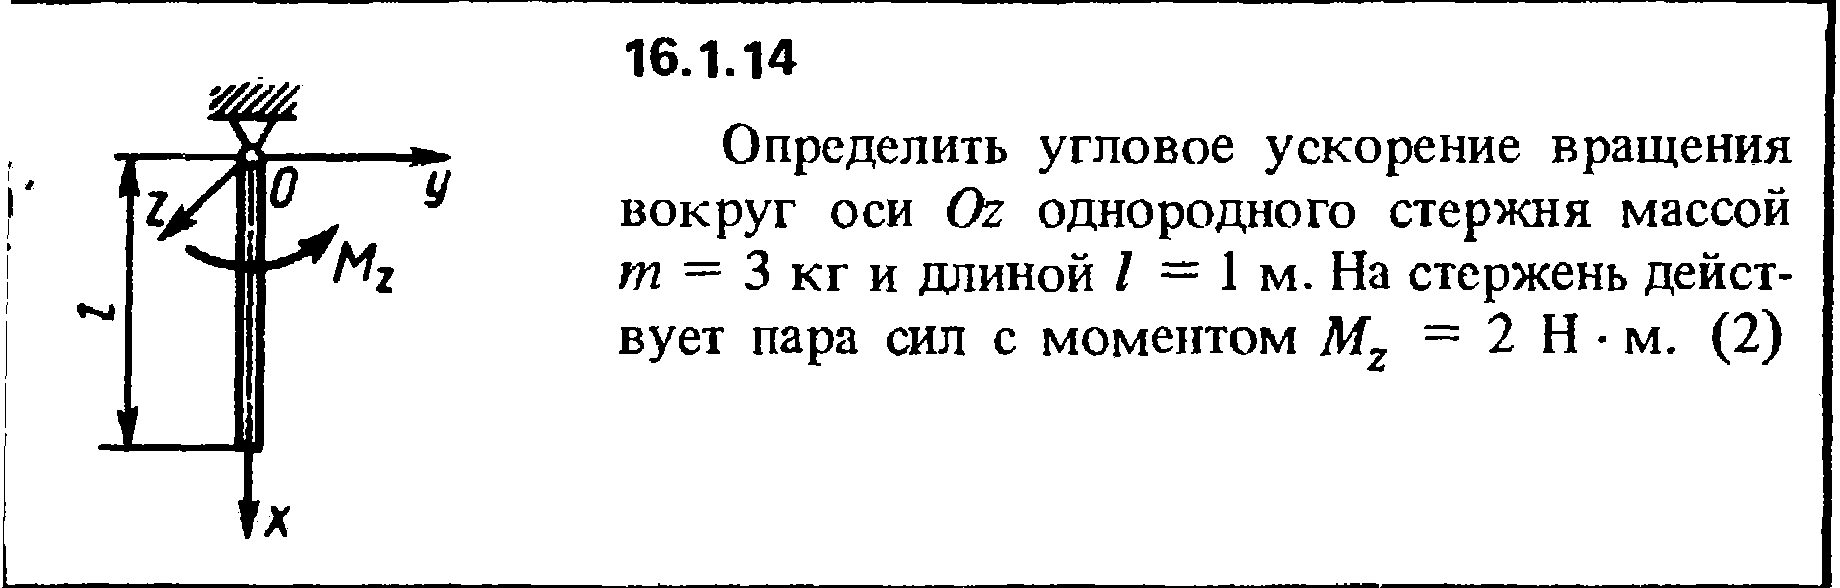 Решение задачи 16.1.14 из сборника Кепе О.Е. 1989 года